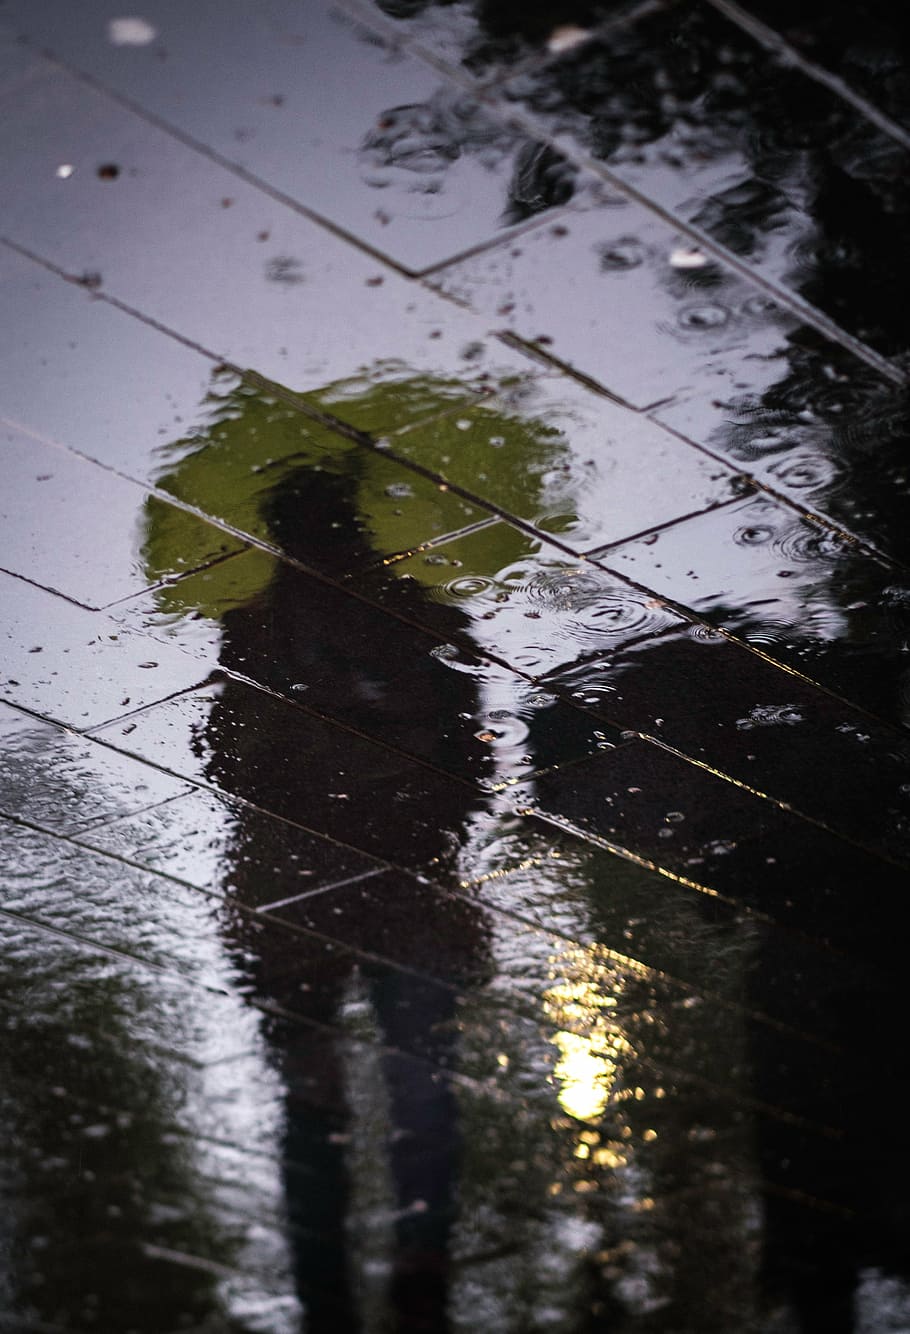 shadow, person, holding, umbrella, road, street, wet, water, rain, people